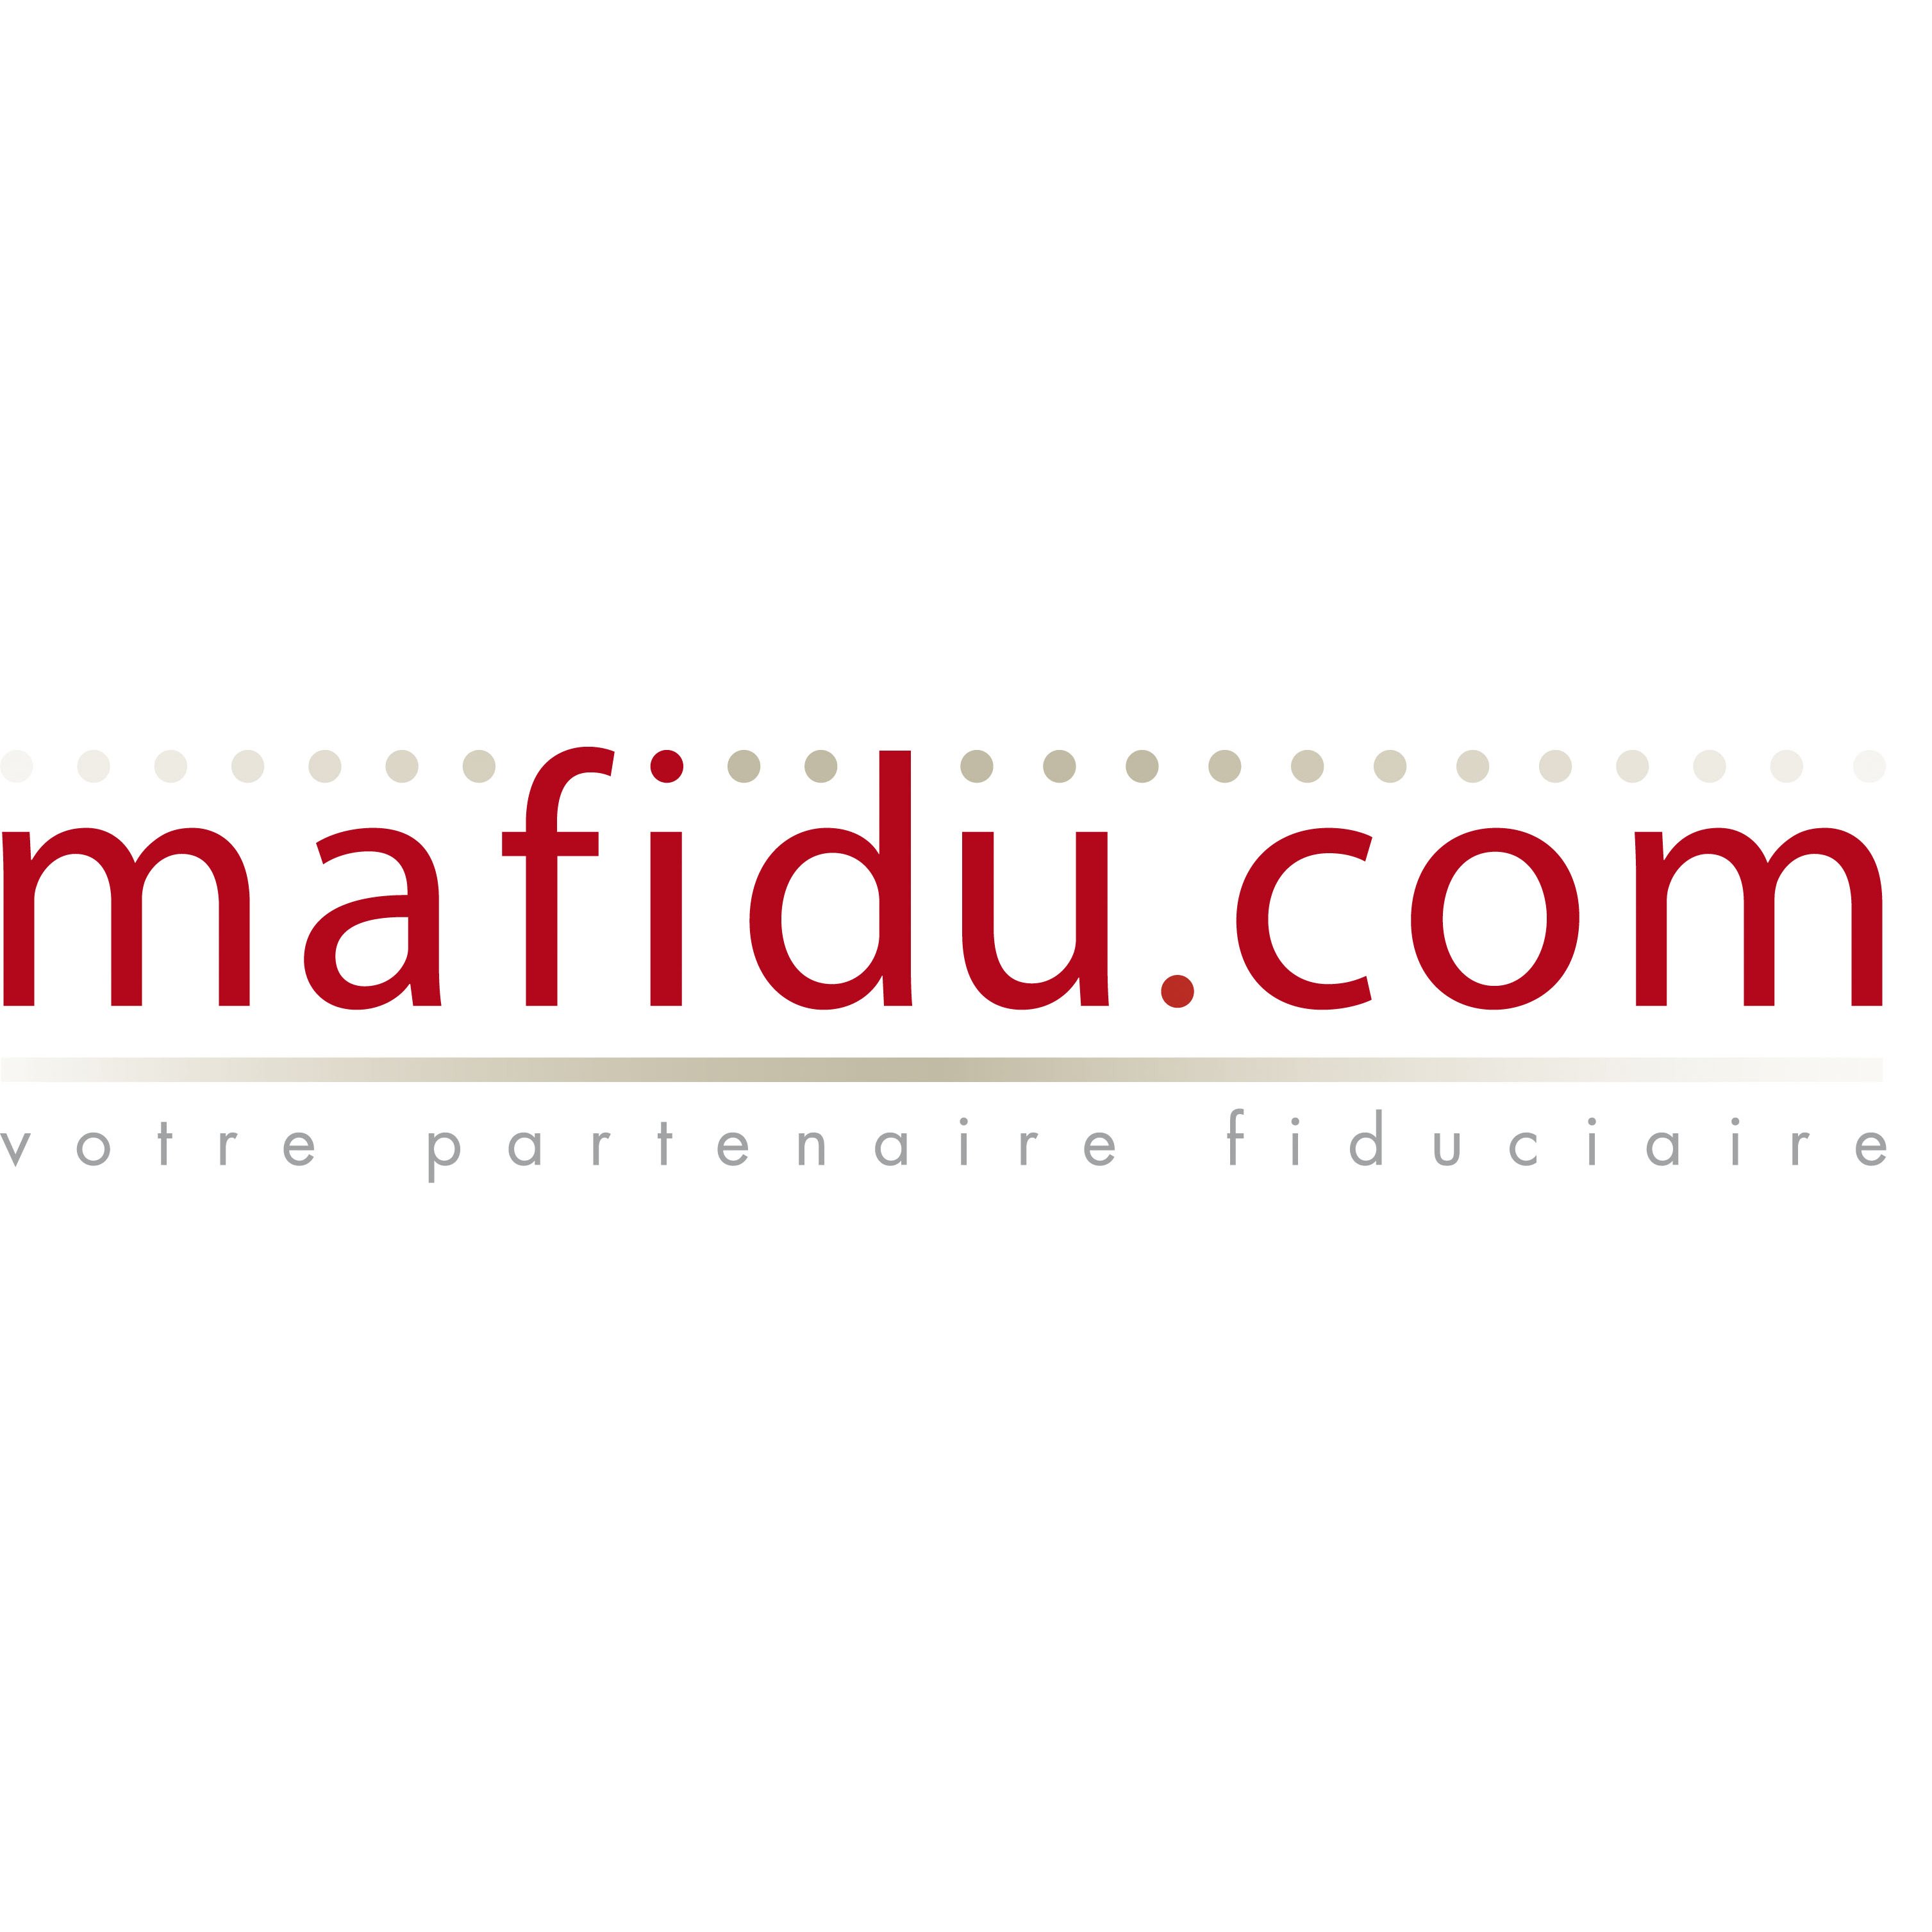 mafidu.com fiduciaire SA Logo